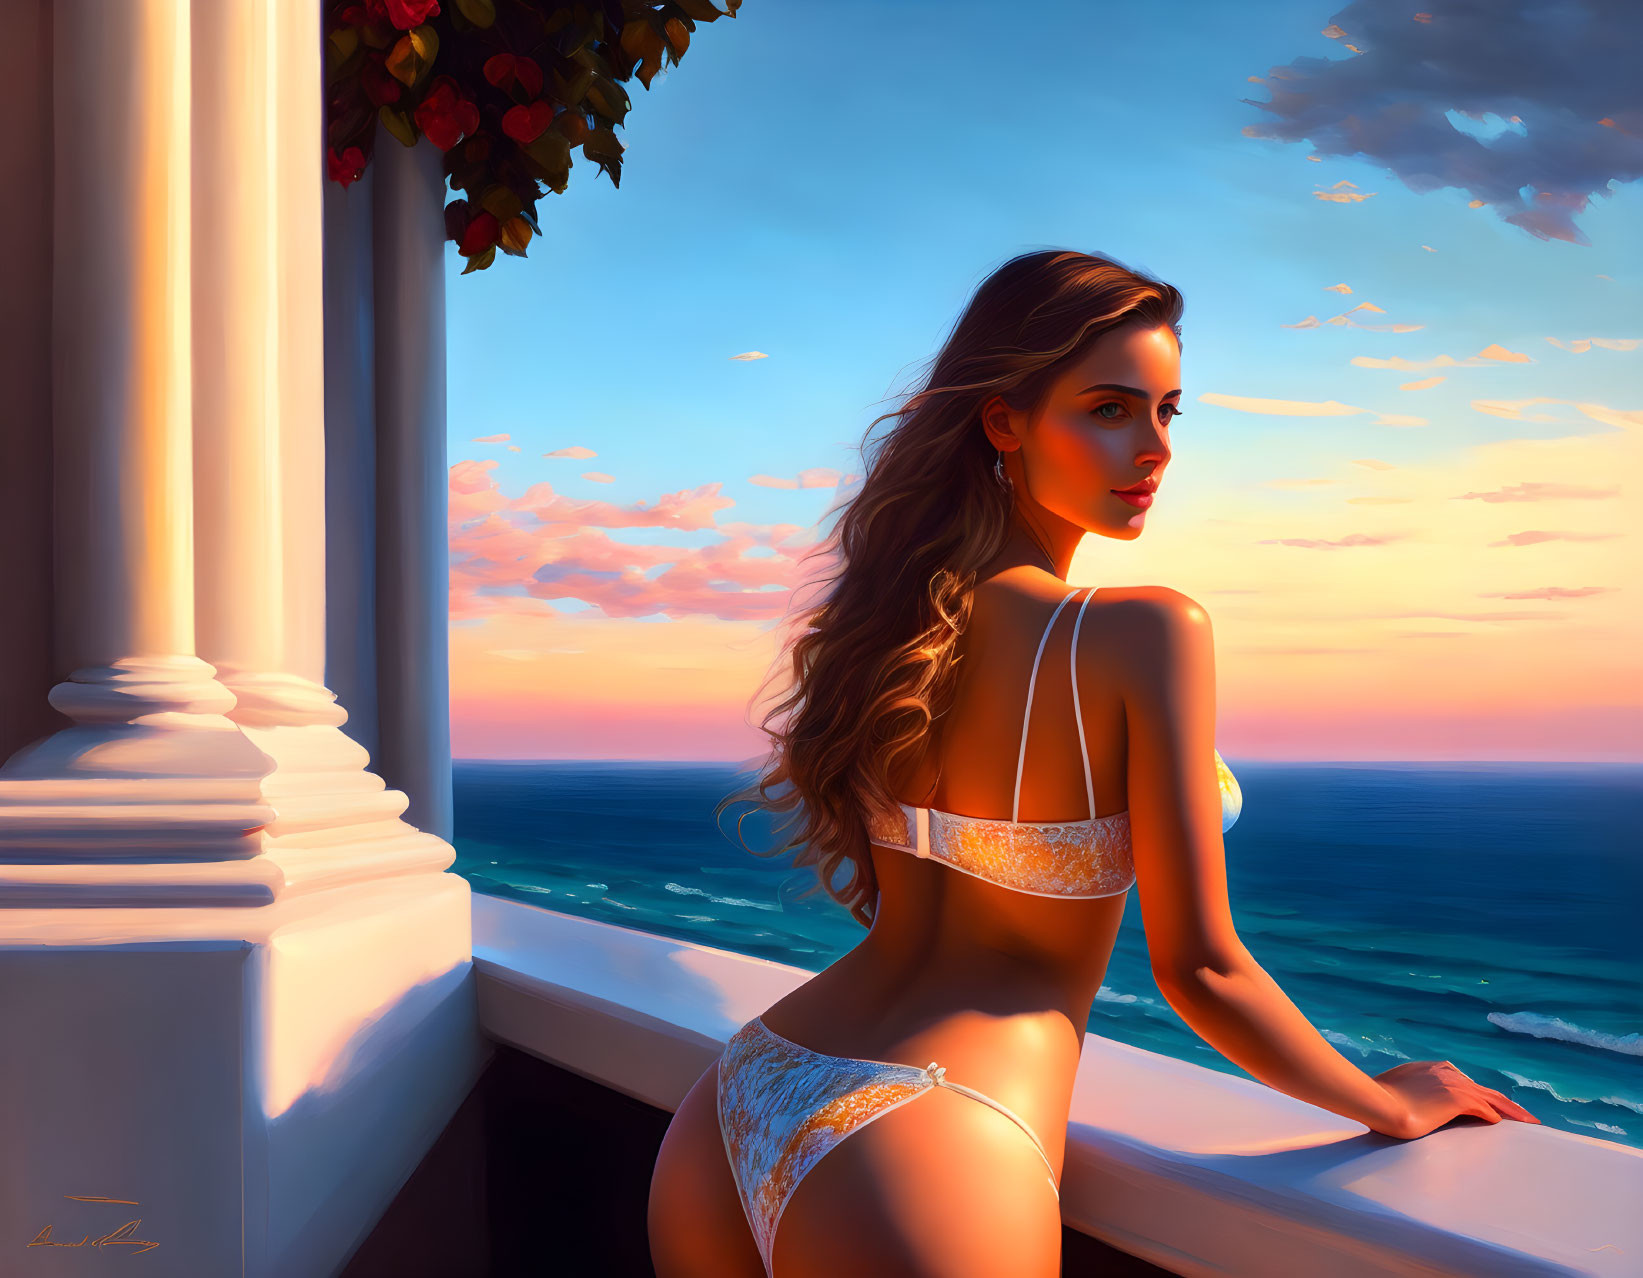 Woman in bikini on balcony overlooking seaside sunset